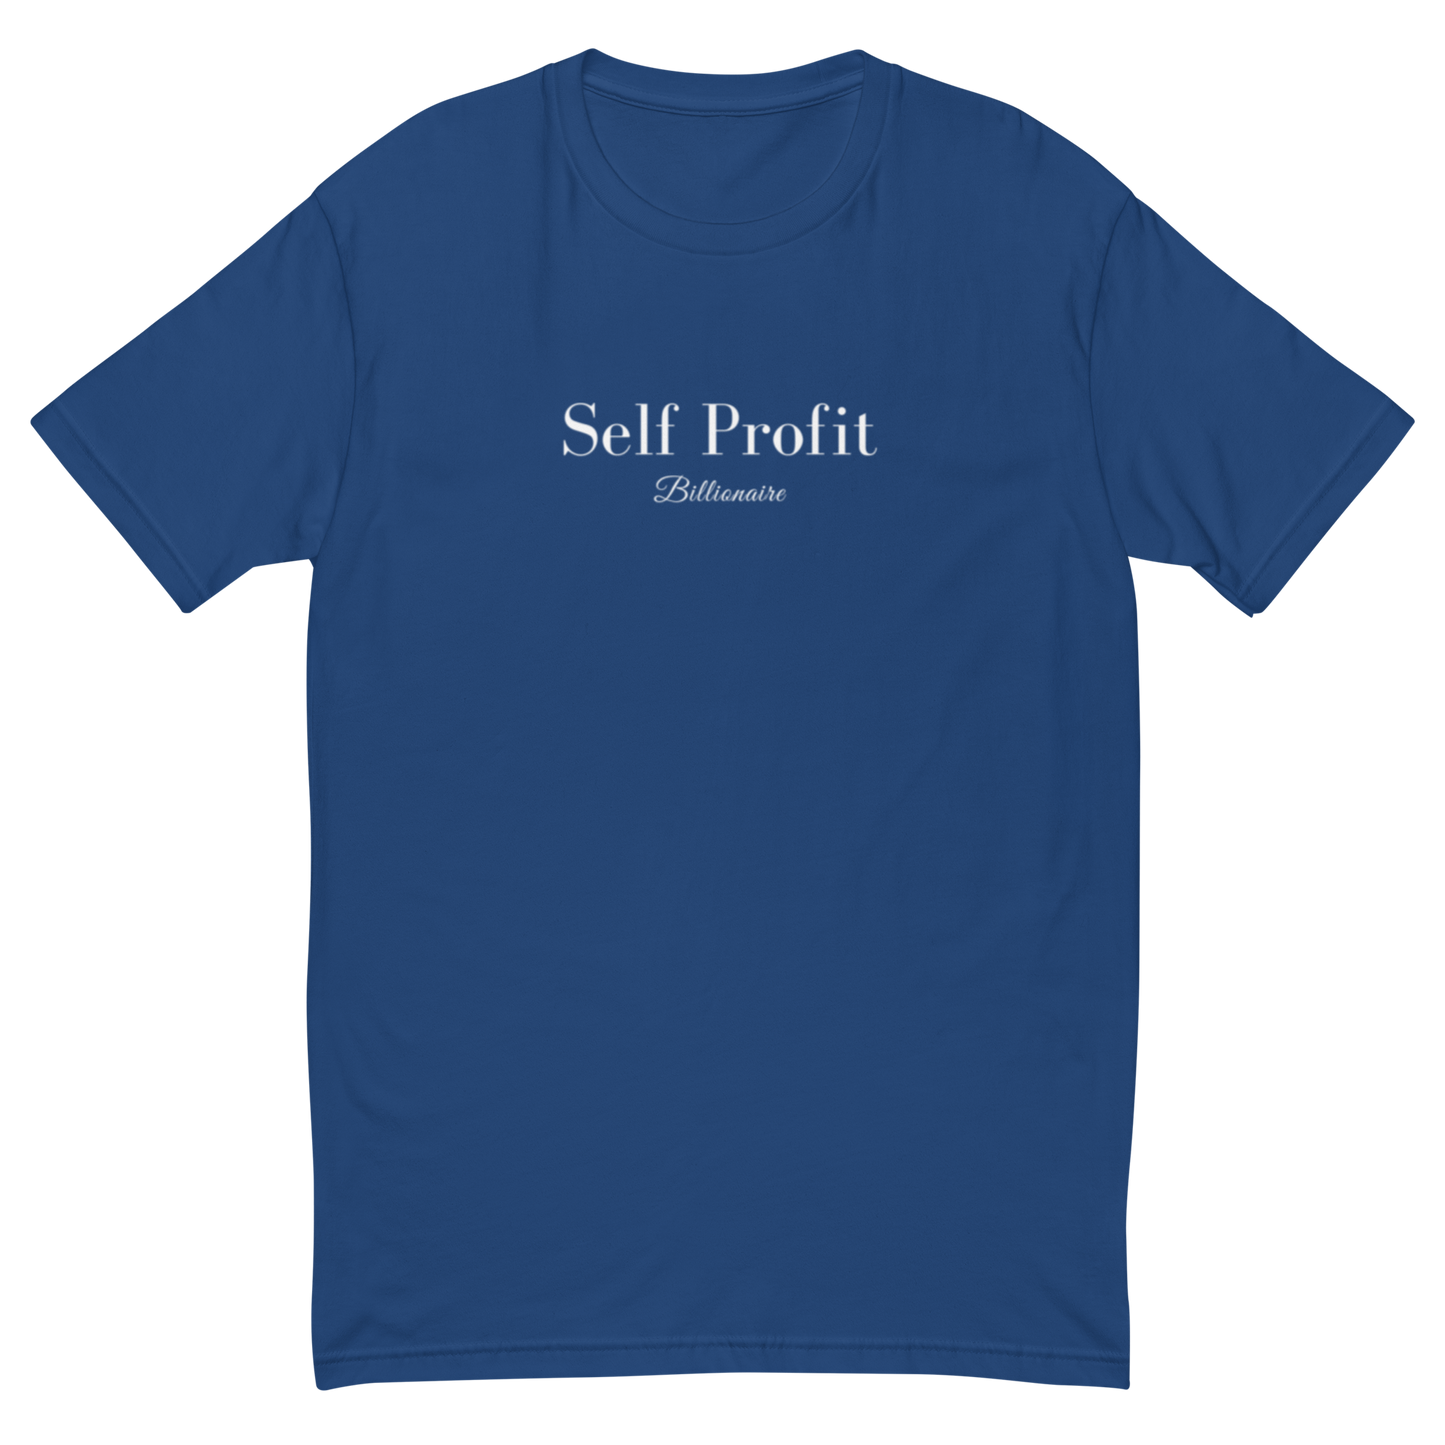 Self Profit "Billionaire" T-Shirt